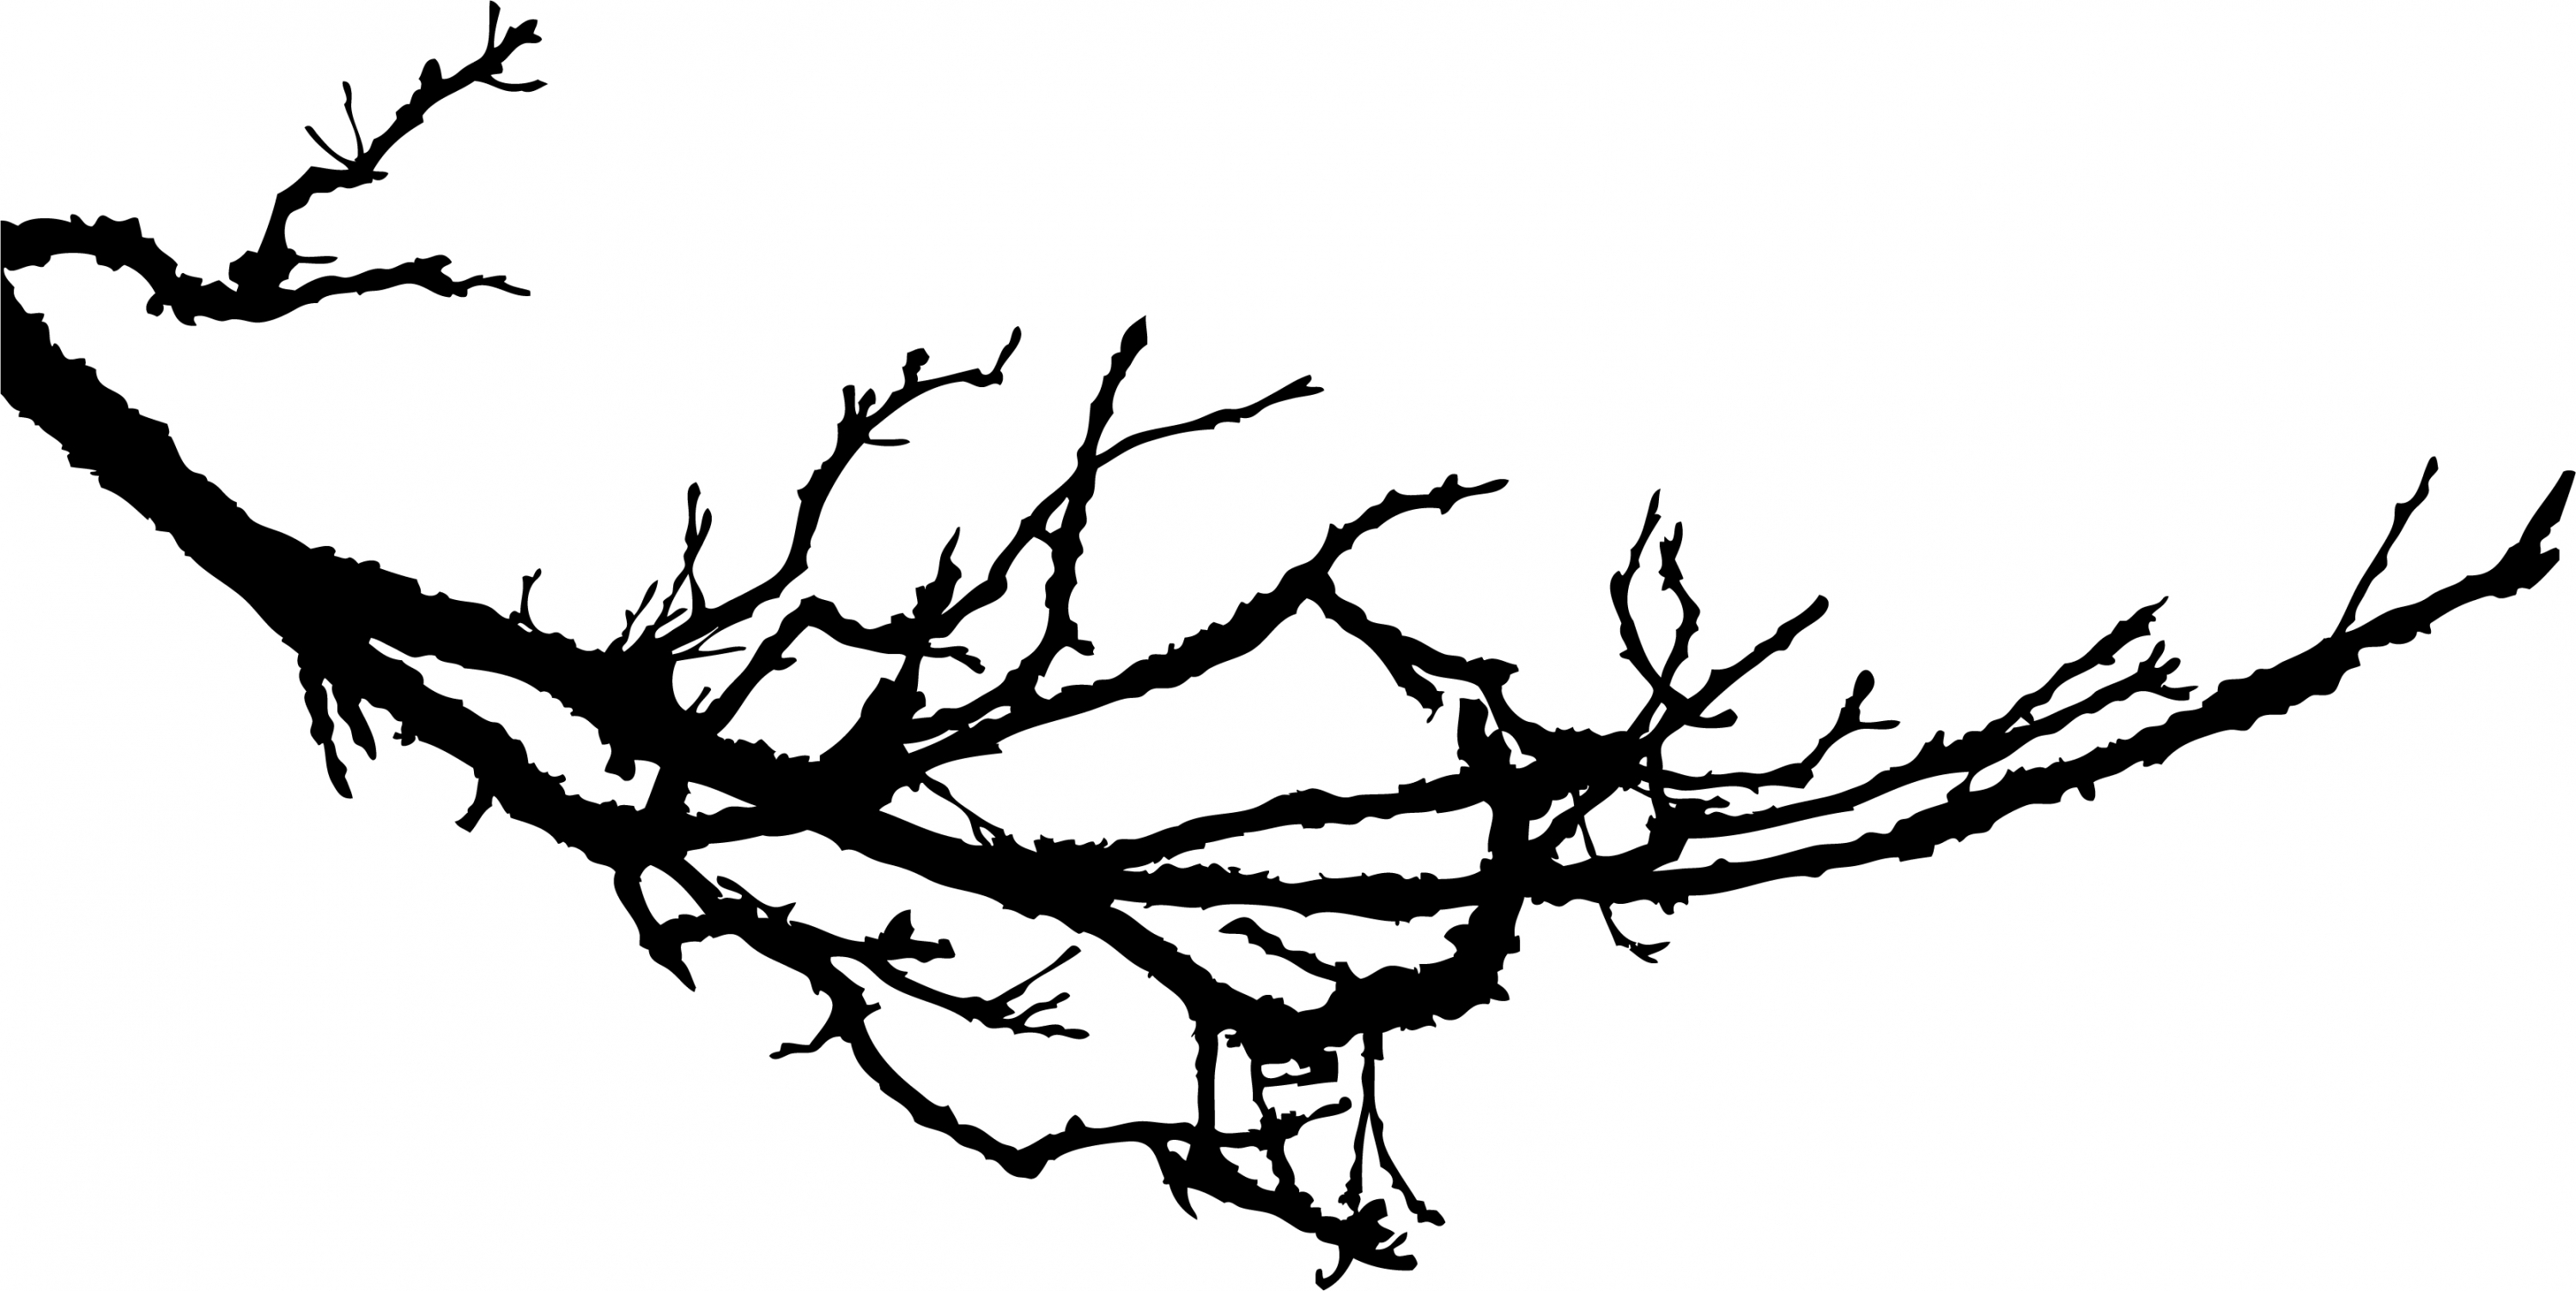 Tree Branch Silhouette Clip Art